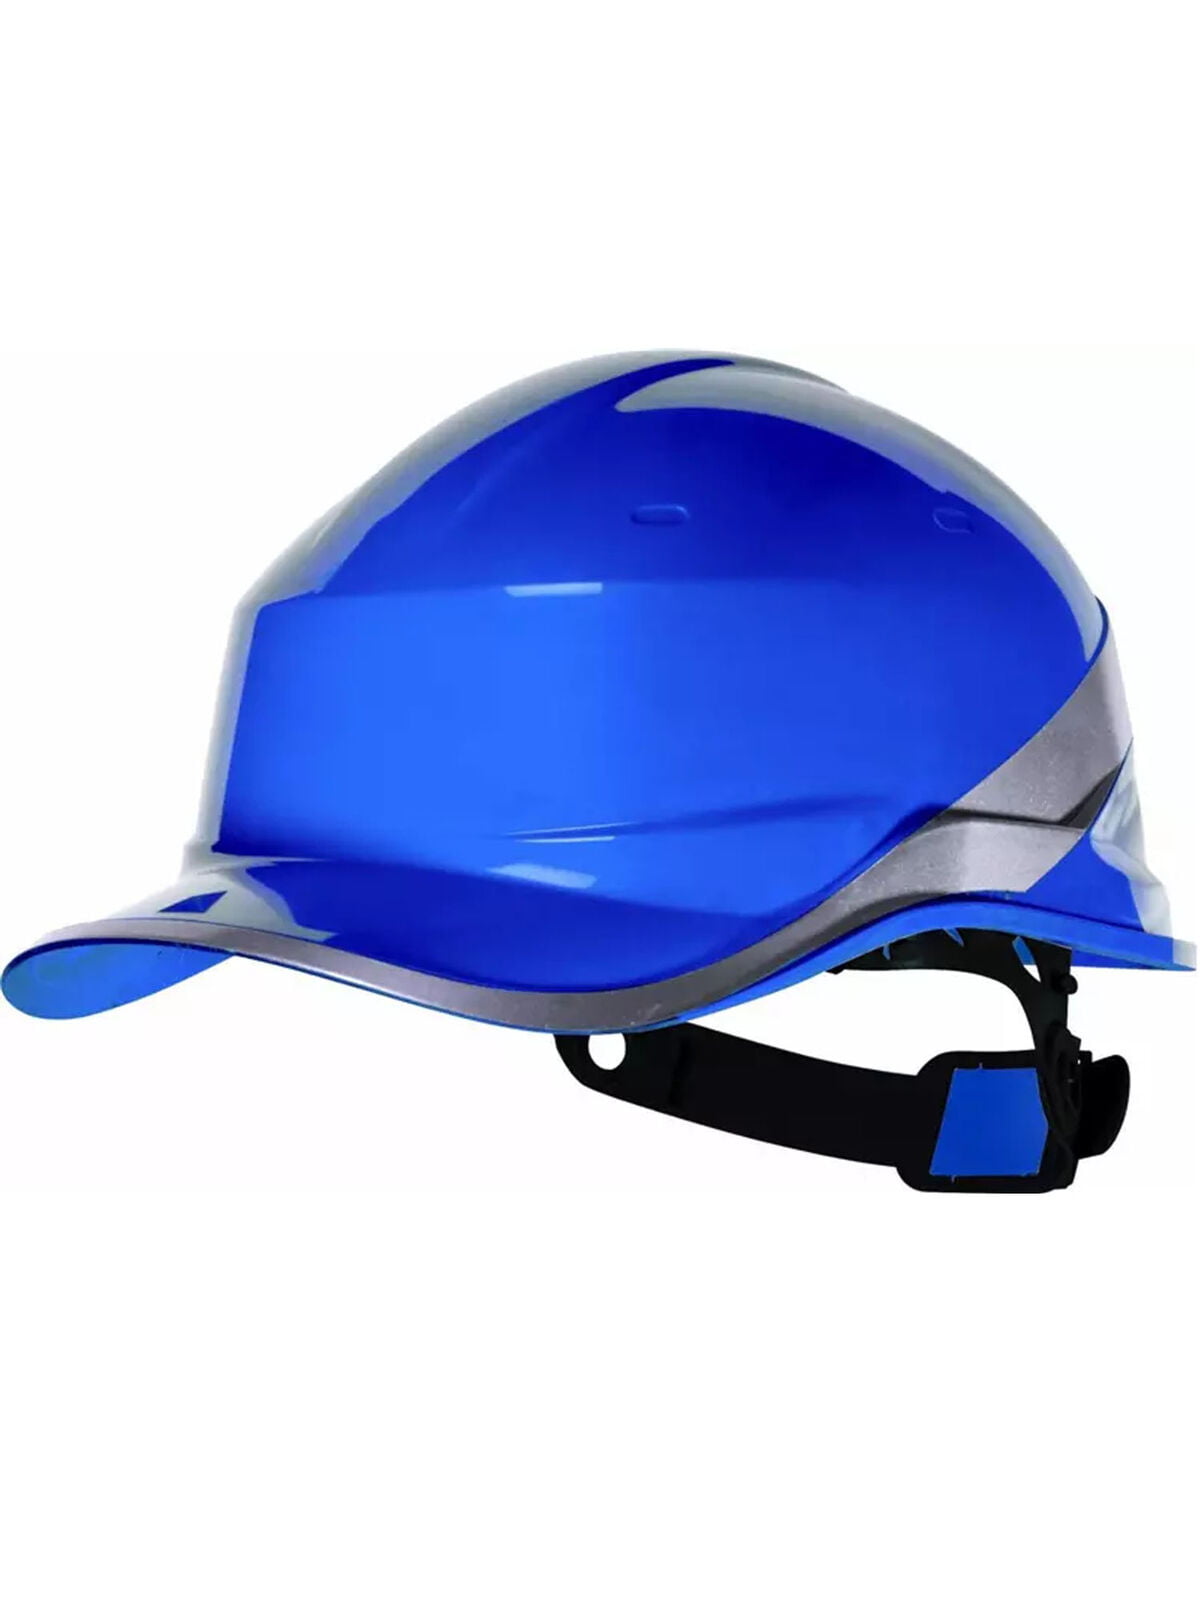 Safety Helmet Helmets Hard Hat 8 Point Harness Sweatband Builders Work 